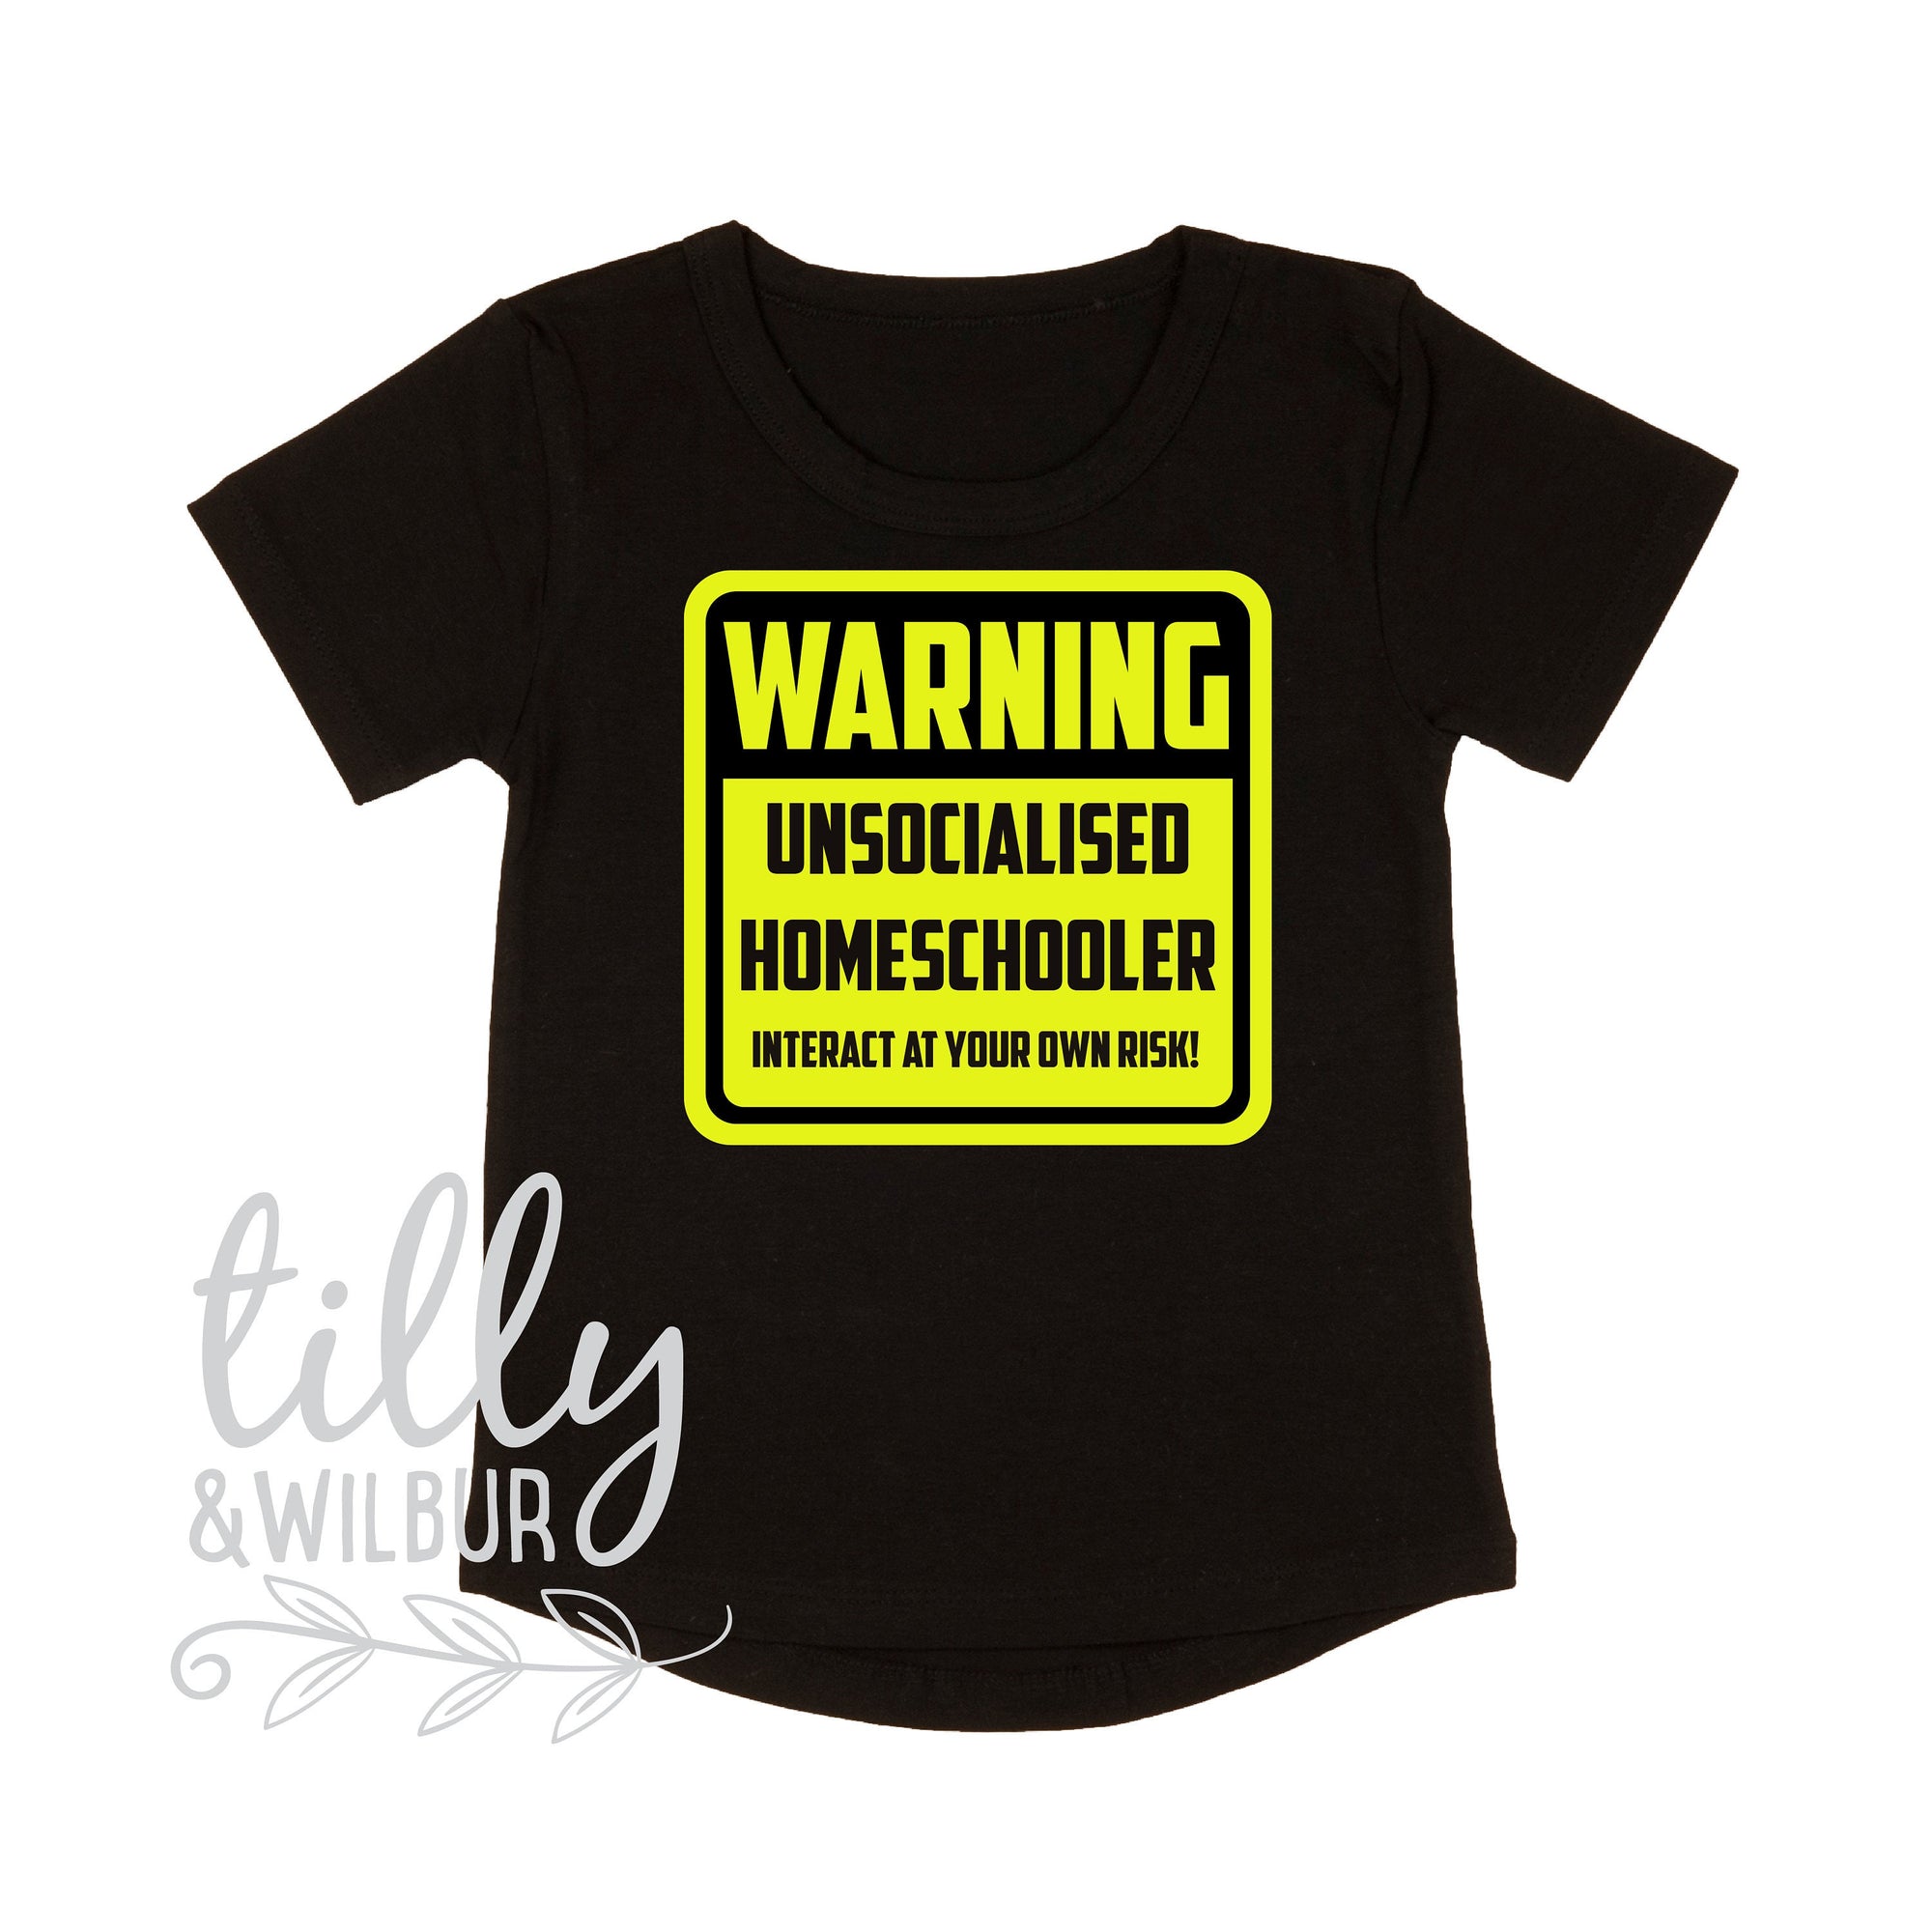 Warning Unsocialised Homeschooler Interact At Your Own Risk, Homeschooler T-Shirt, Home School Shirt, Homeschool Uniform, Homeschool Gift